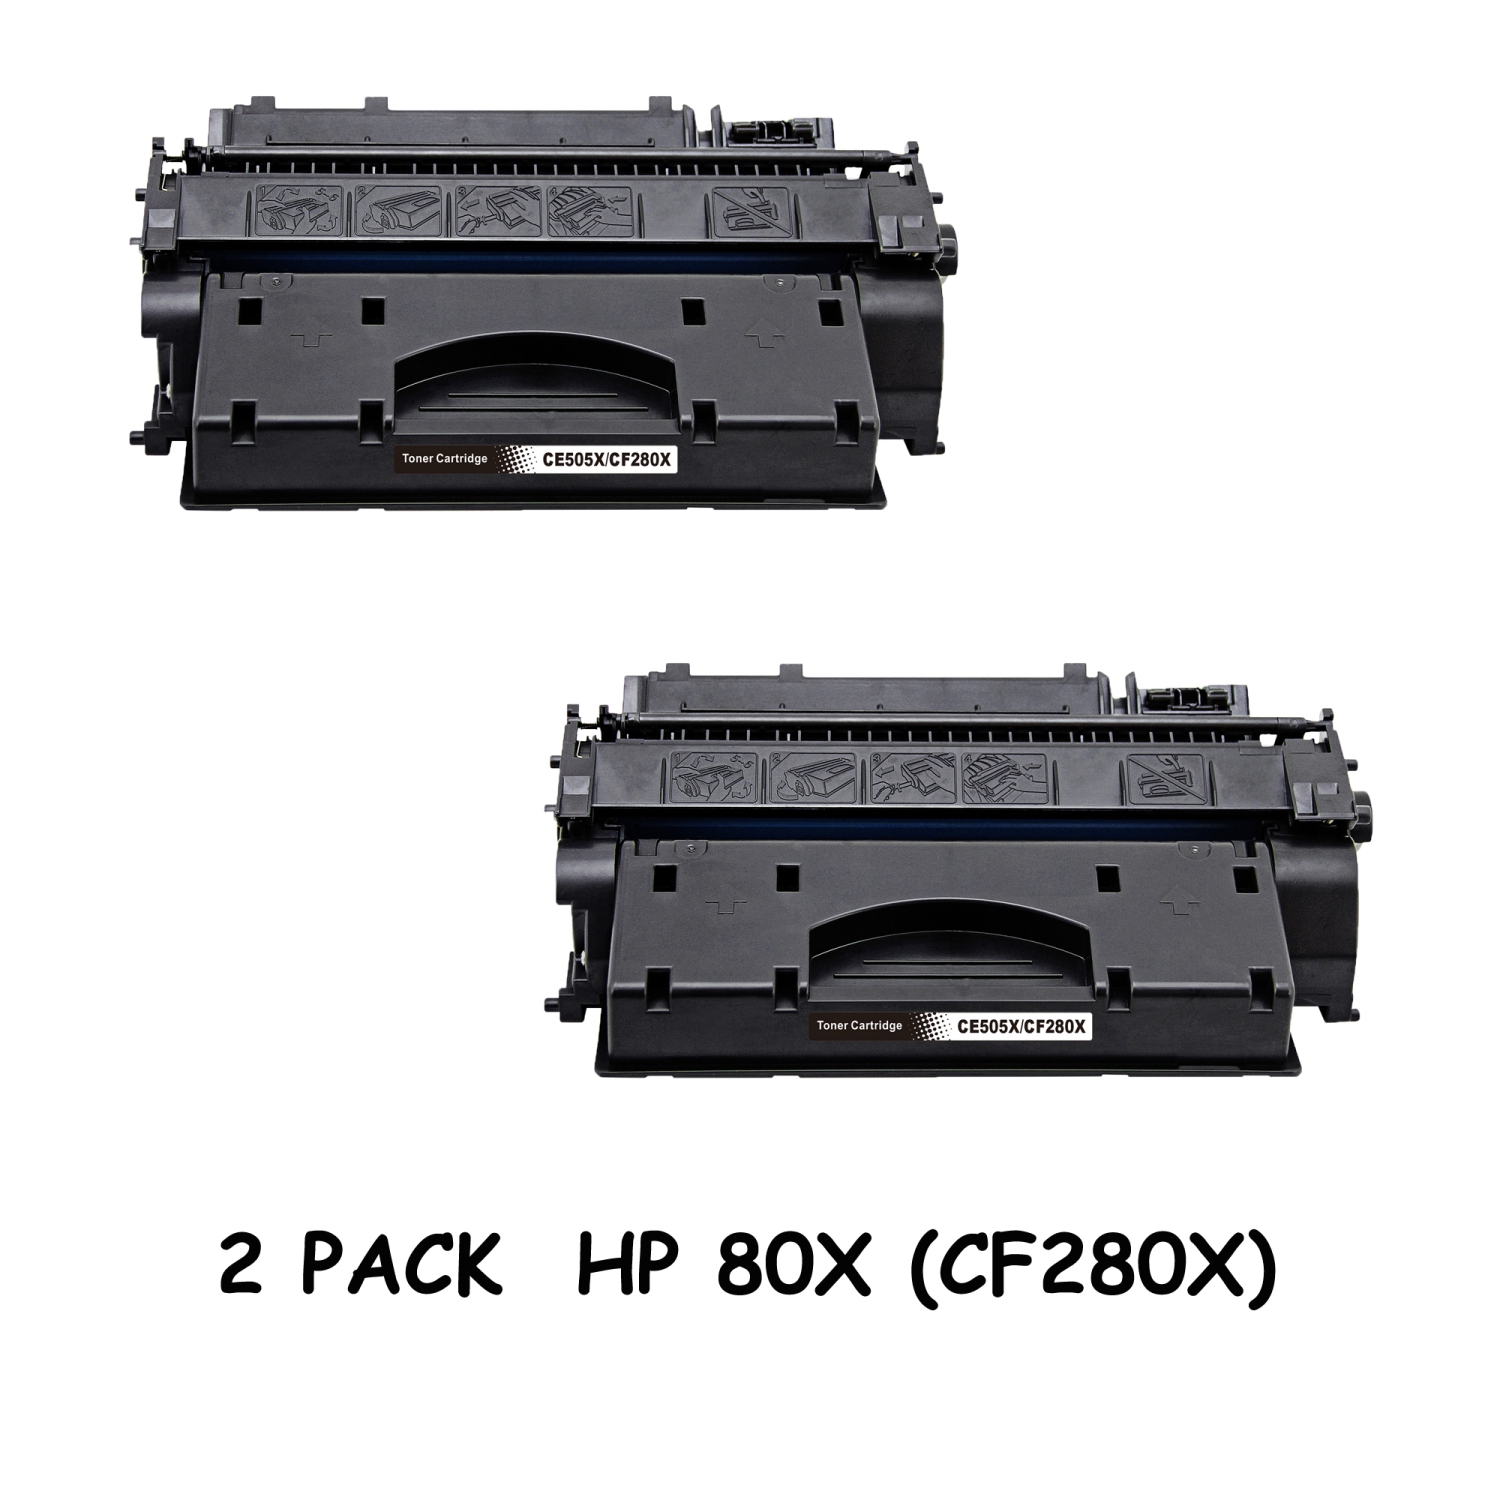 Bestoner™ 2 PK HP 80X (CF280X)/hp80x/80x/HP80X/80X/CF280X/cf280x/cf280/280/80A/80 HP LaserJet Pro M401 M425d